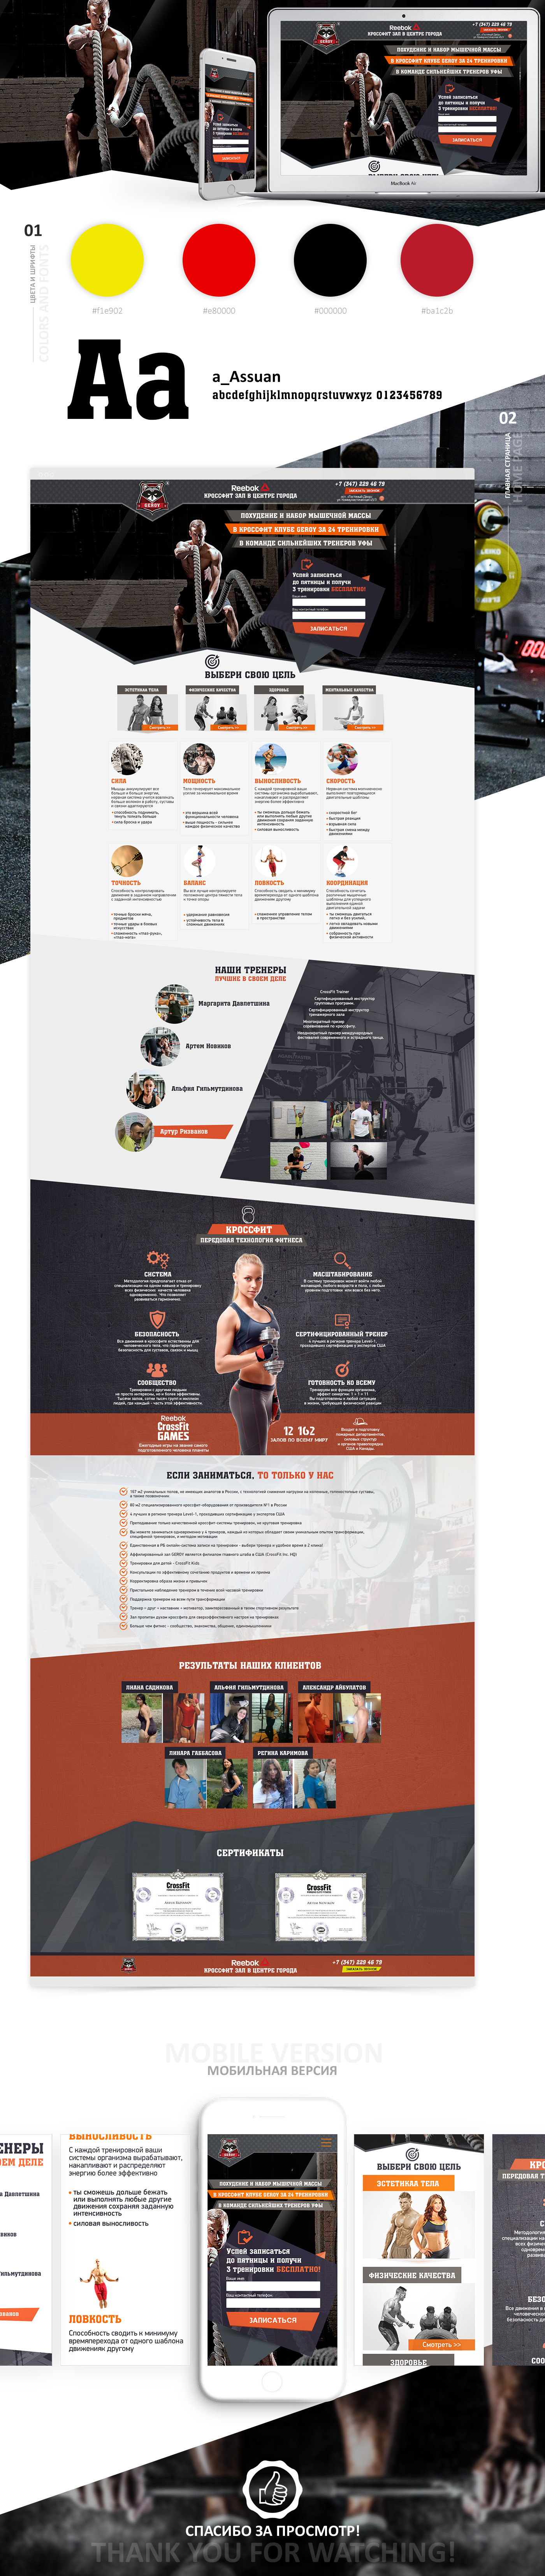 Landing Page - crossfit hall - Geroy (Hero) mobile Crossfit fitness gym design ux UI